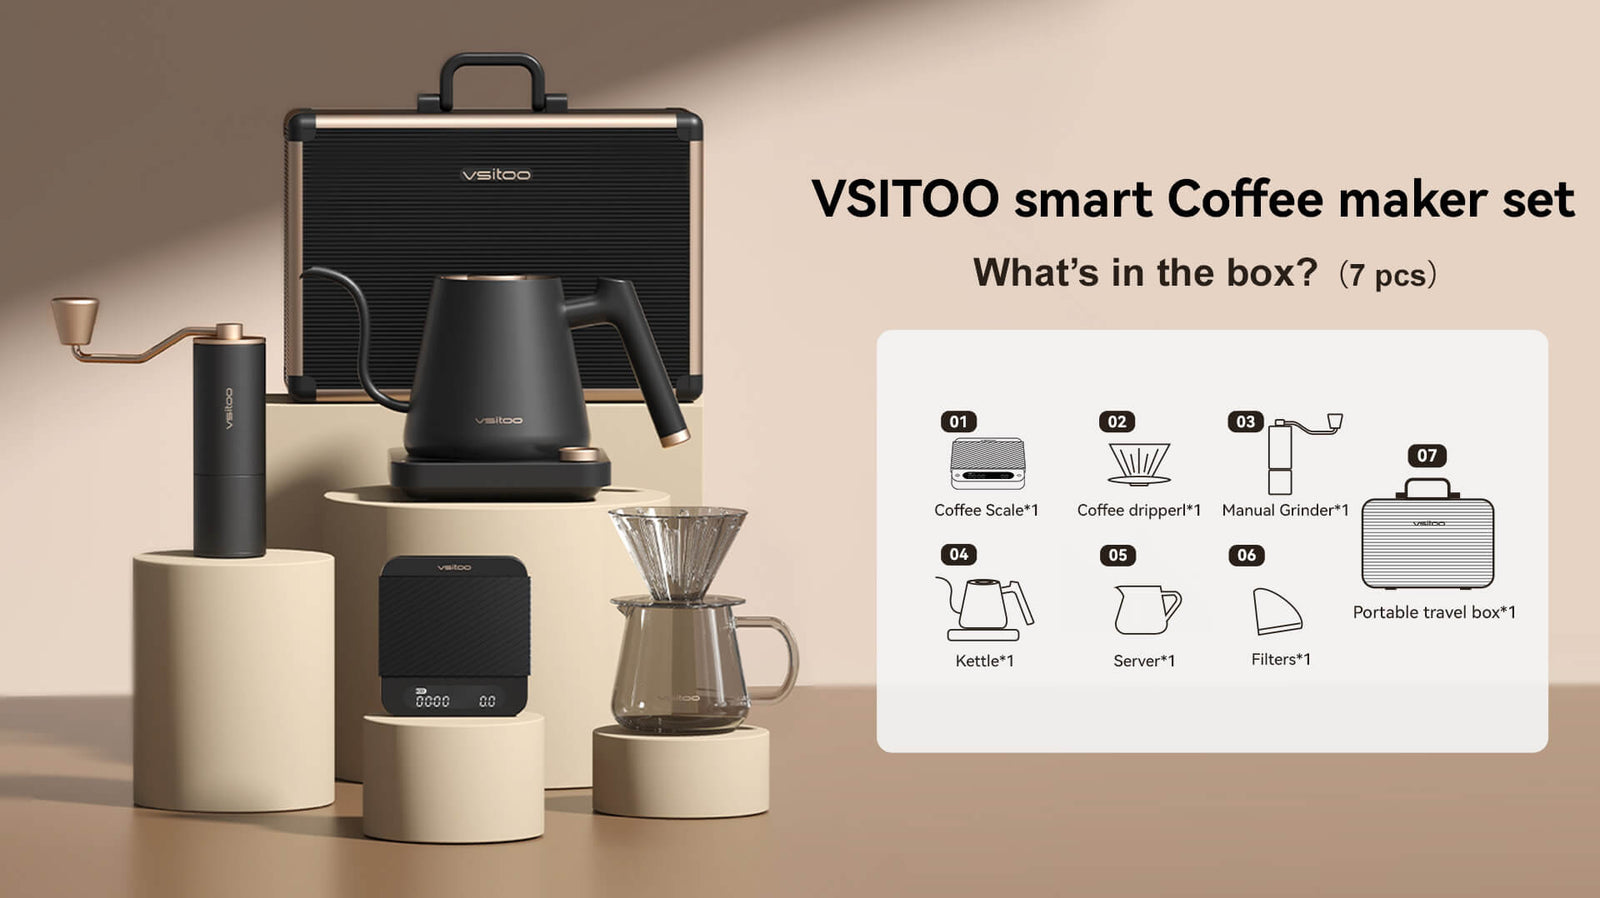 VSITOO SMART COFFEE MAKER SET